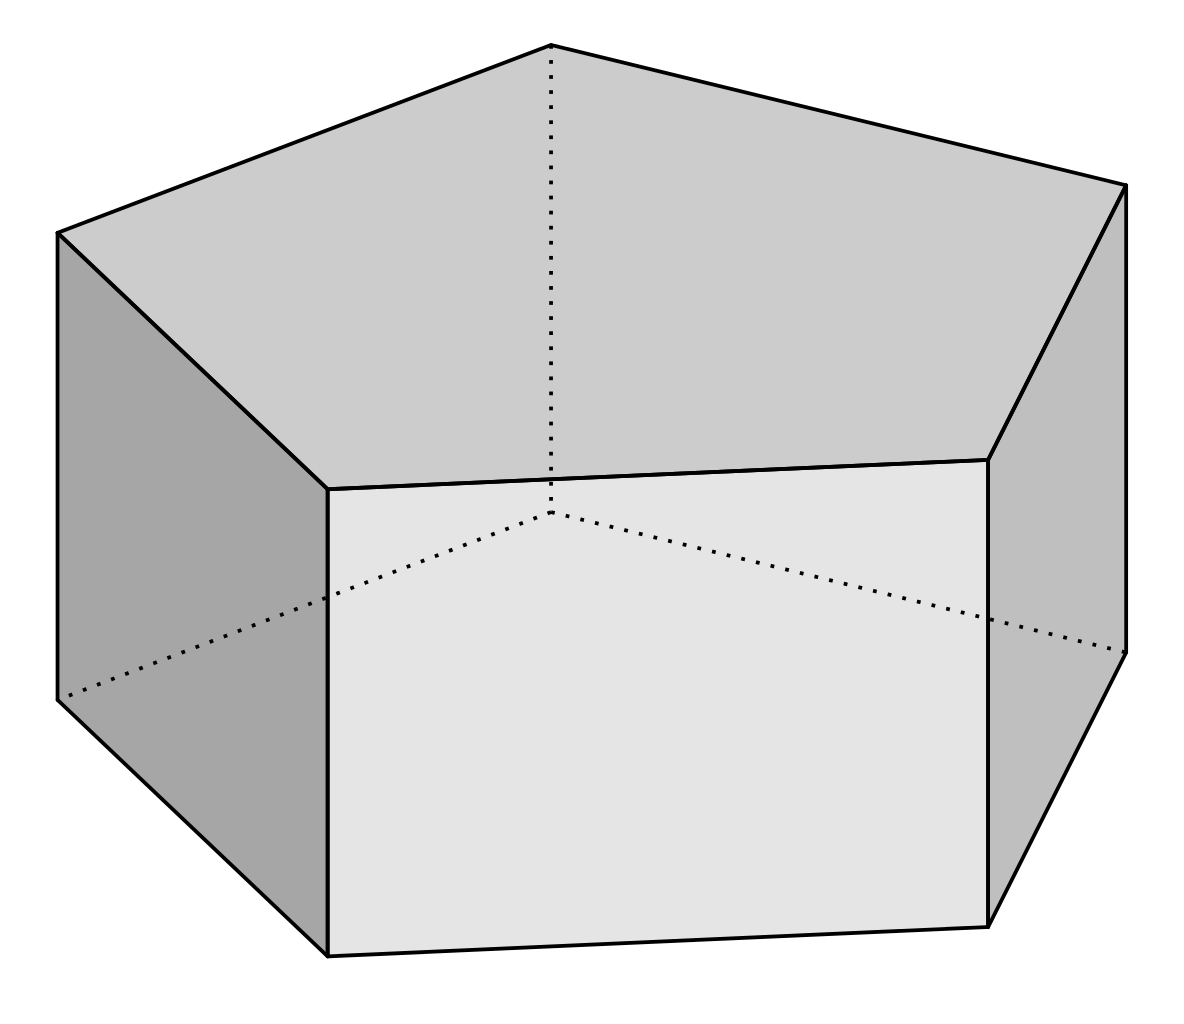 File:Pentagonal Prism (Heptahedron).svg - Wikimedia Commons